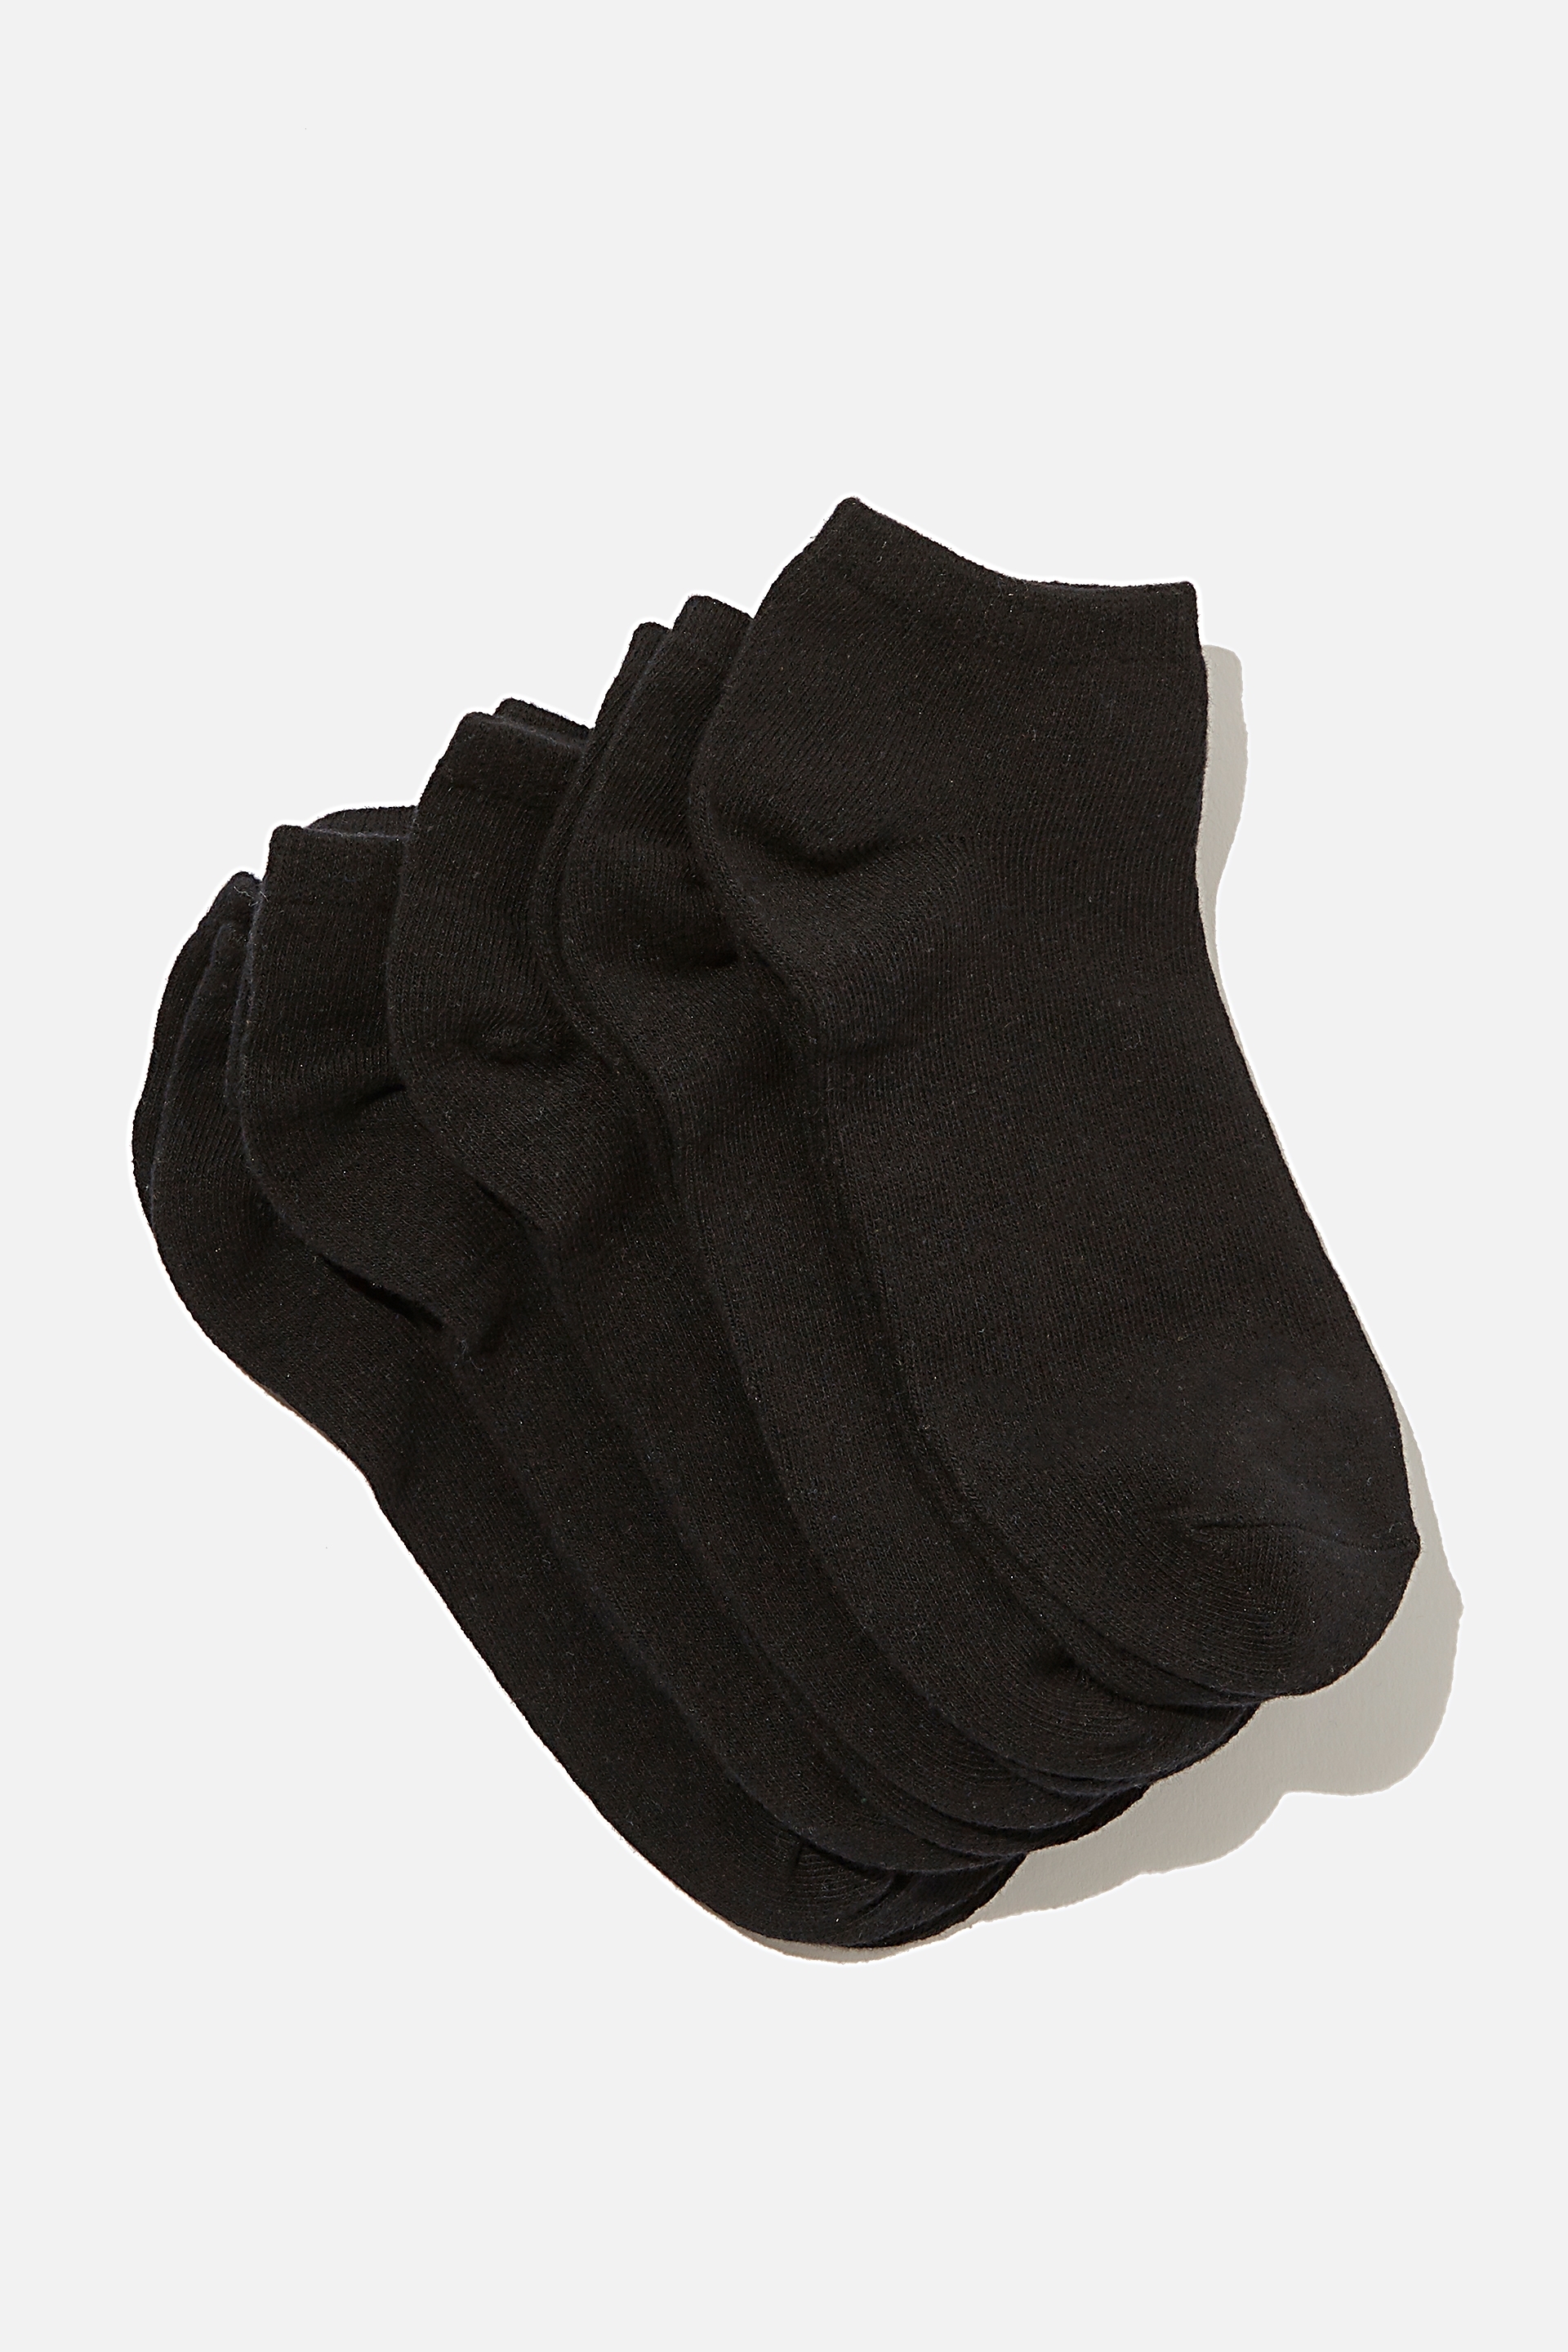 Rubi - 5Pk Ankle Sock - Black